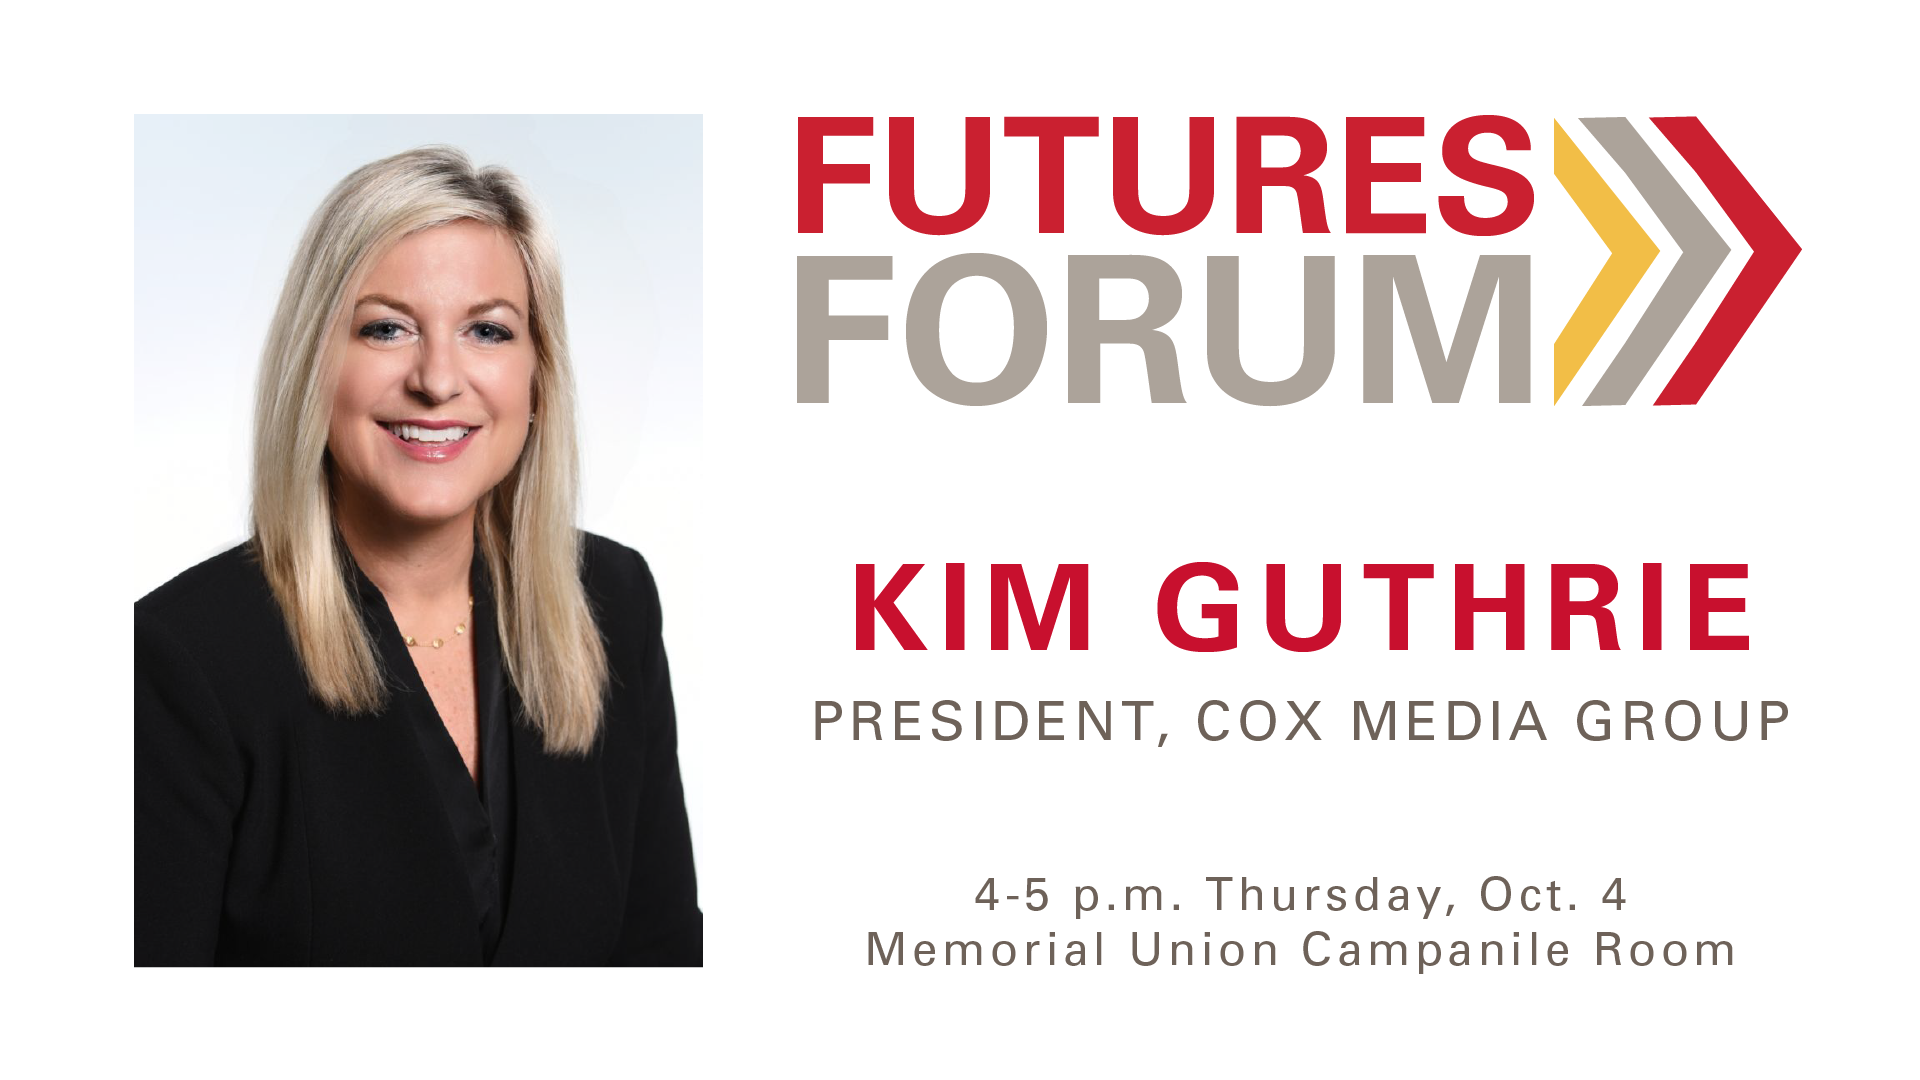 Kim Guthrie headshot and Future Forum logo